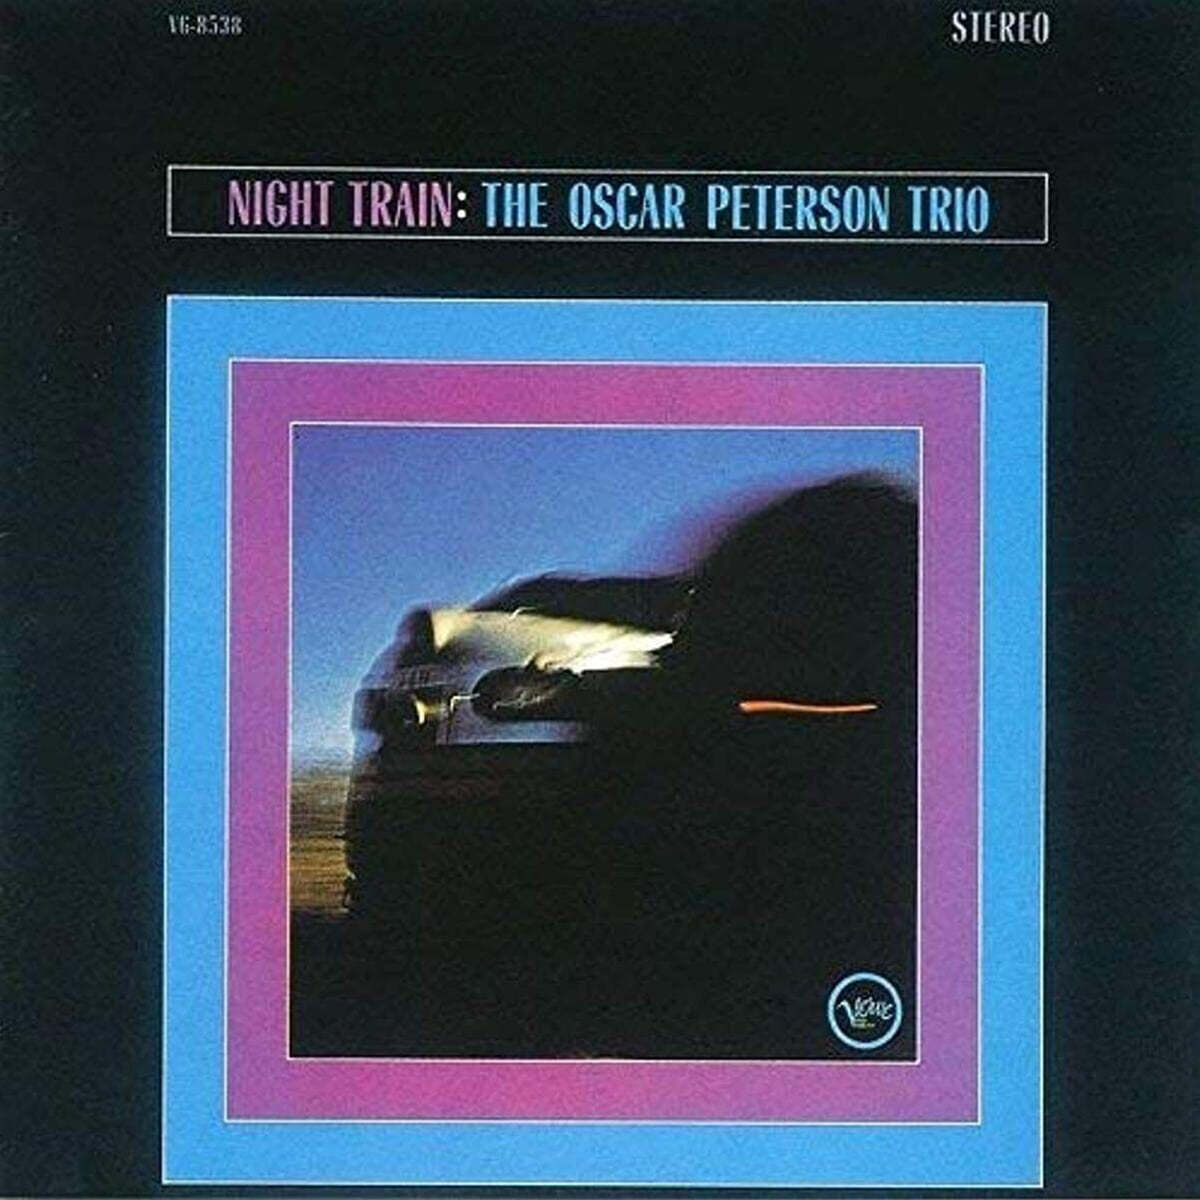 Oscar Peterson Trio (오스카 피터슨 트리오) - Night Train